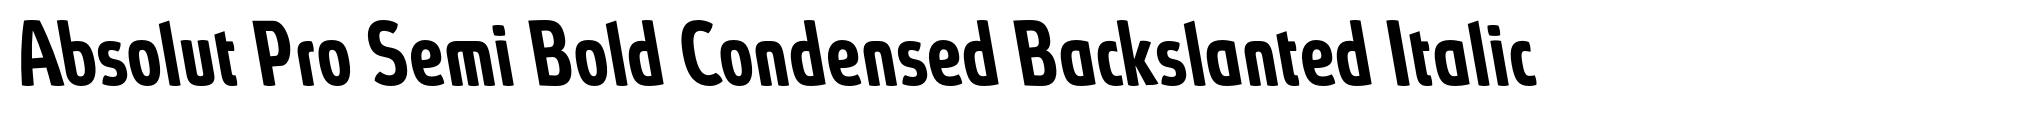 Absolut Pro Semi Bold Condensed Backslanted Italic image